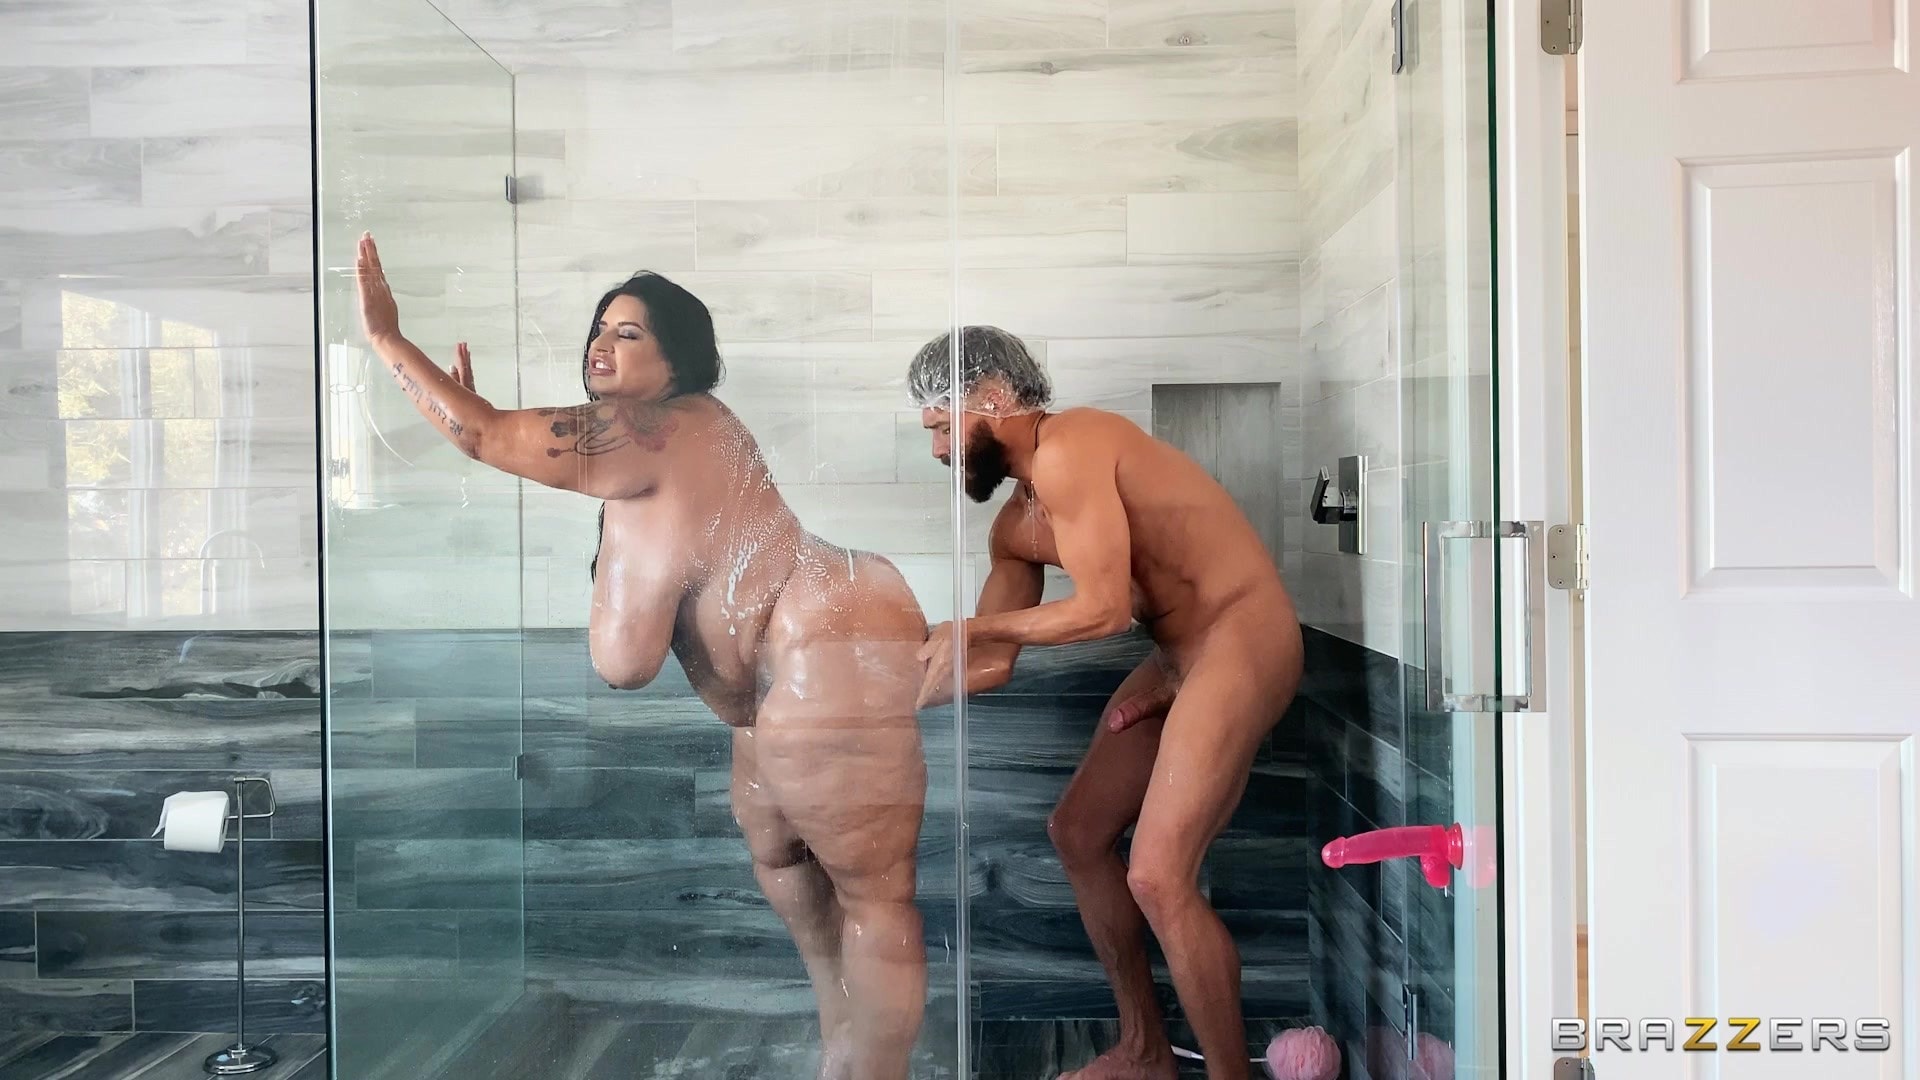 Brazzers 'Dildo Showers Bring Big Cocks' starring Sofia Rose (Photo 2)